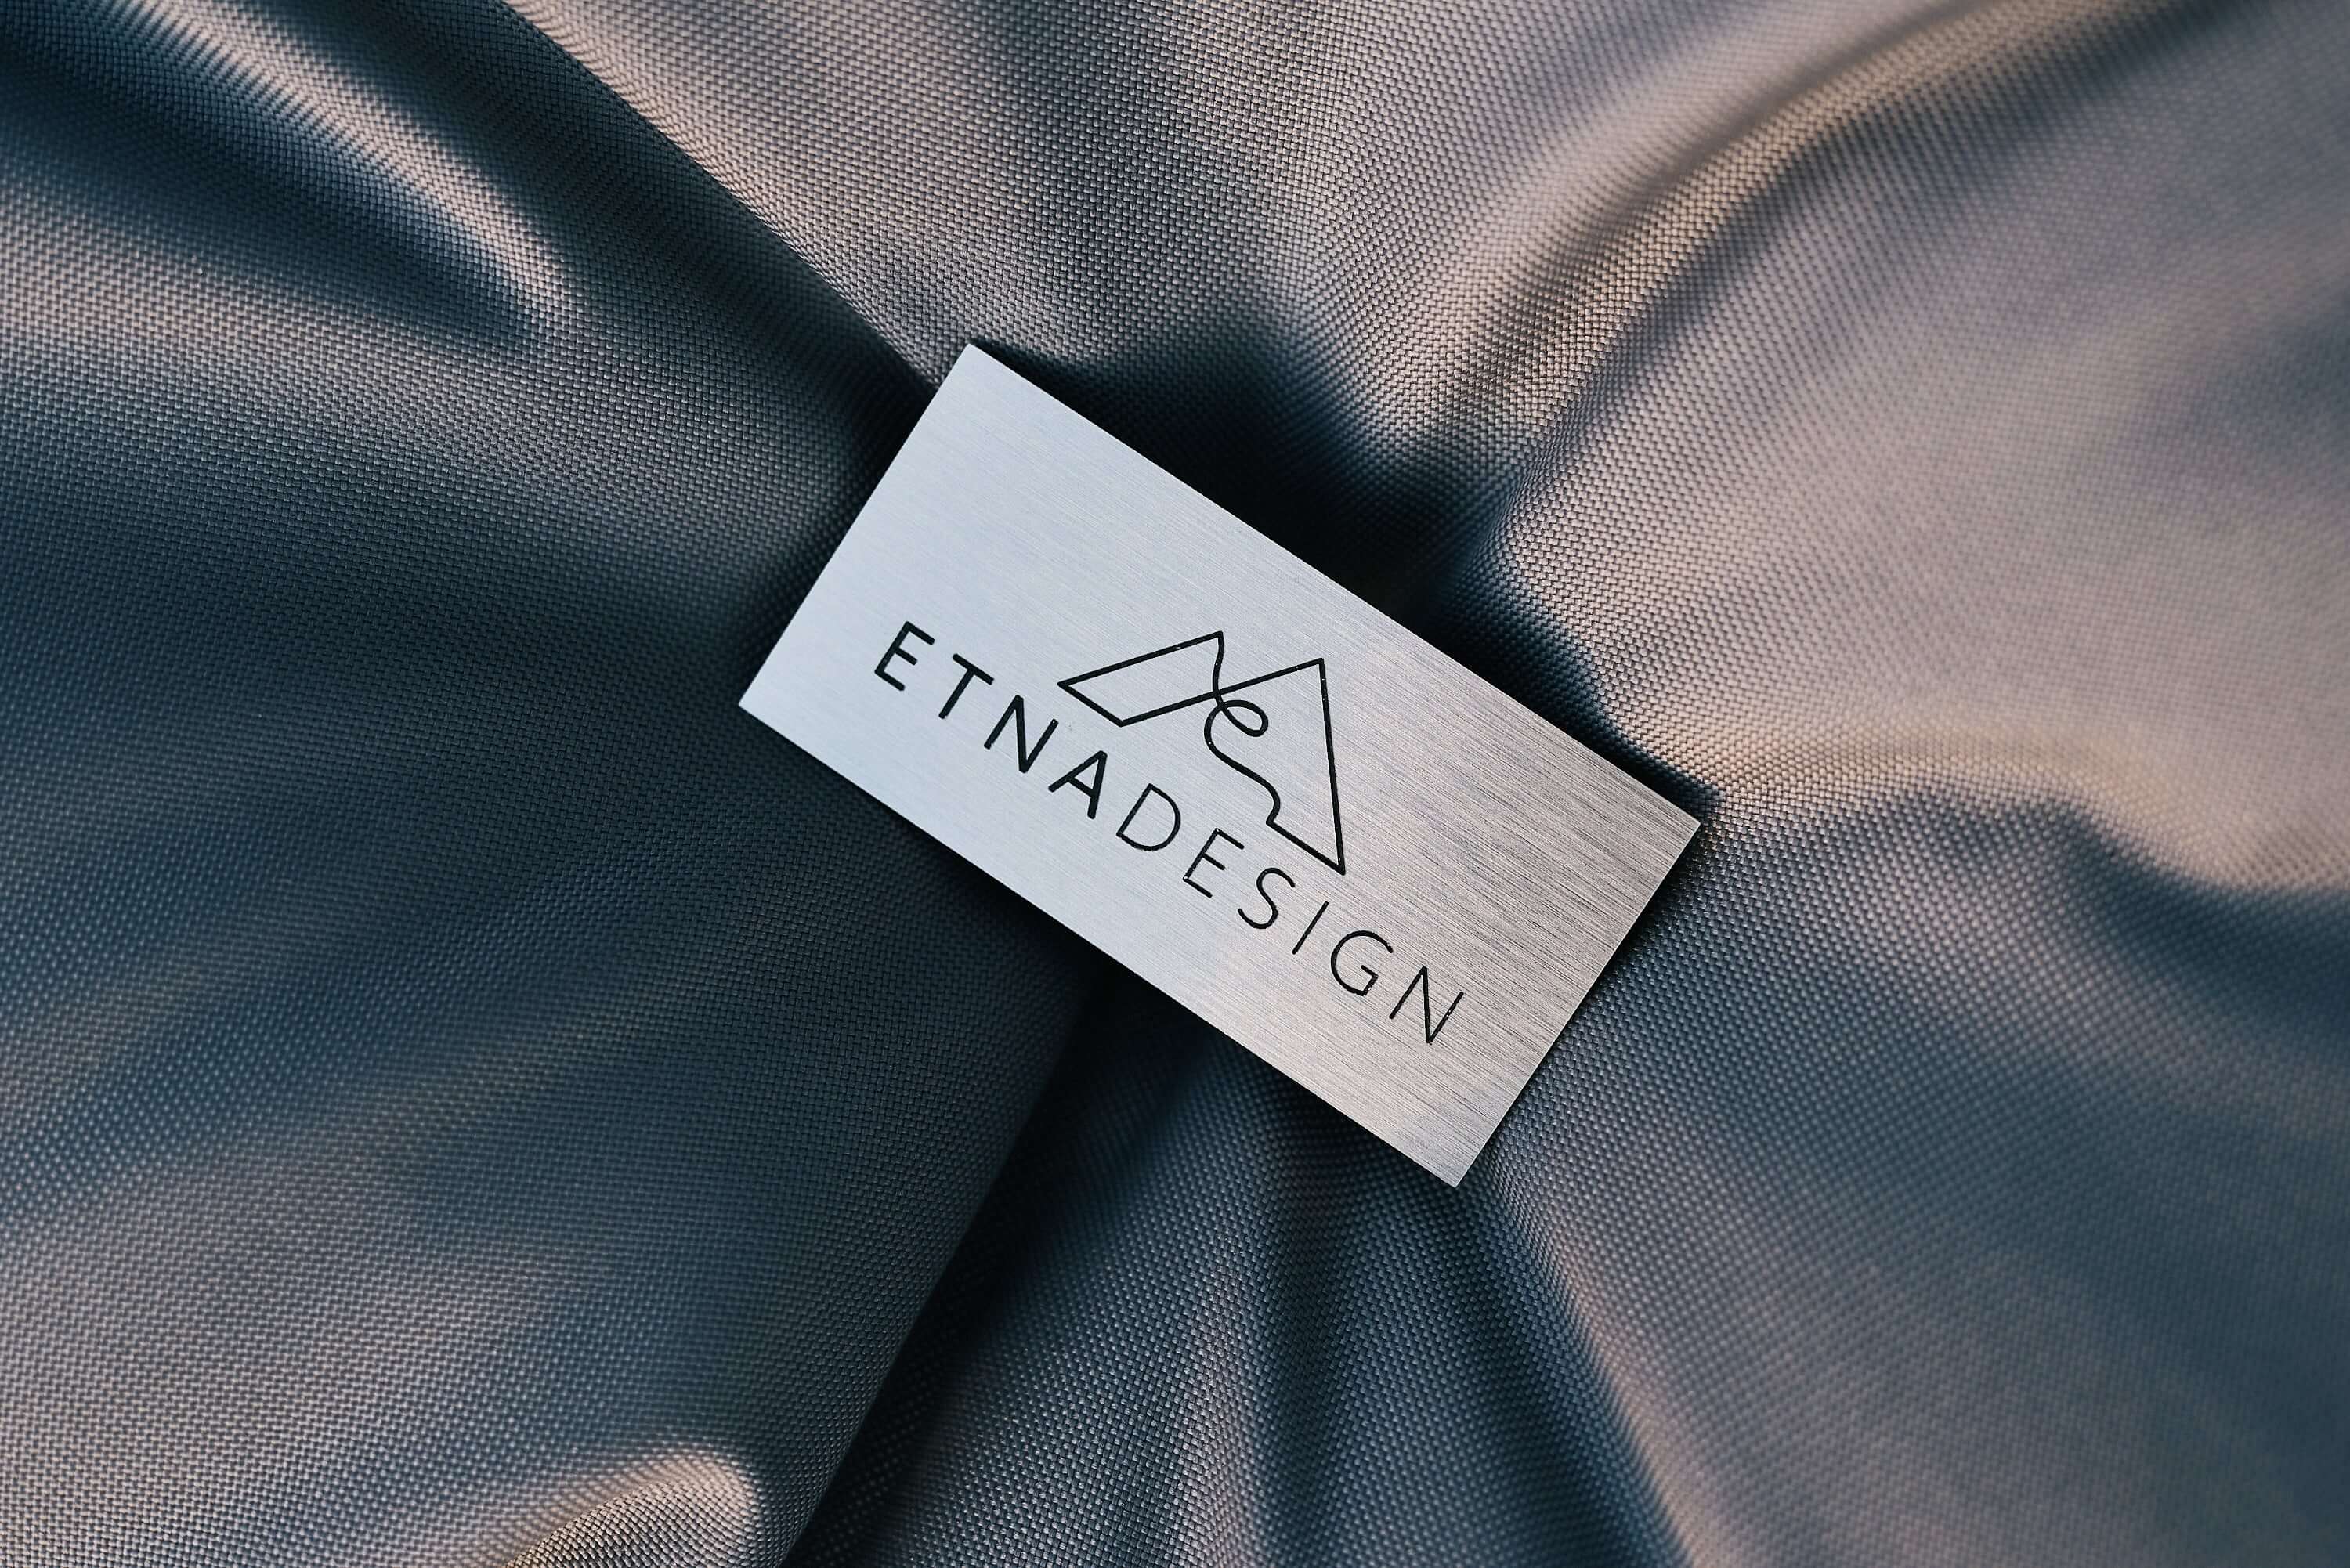  Etna Designs cushions Magma Den